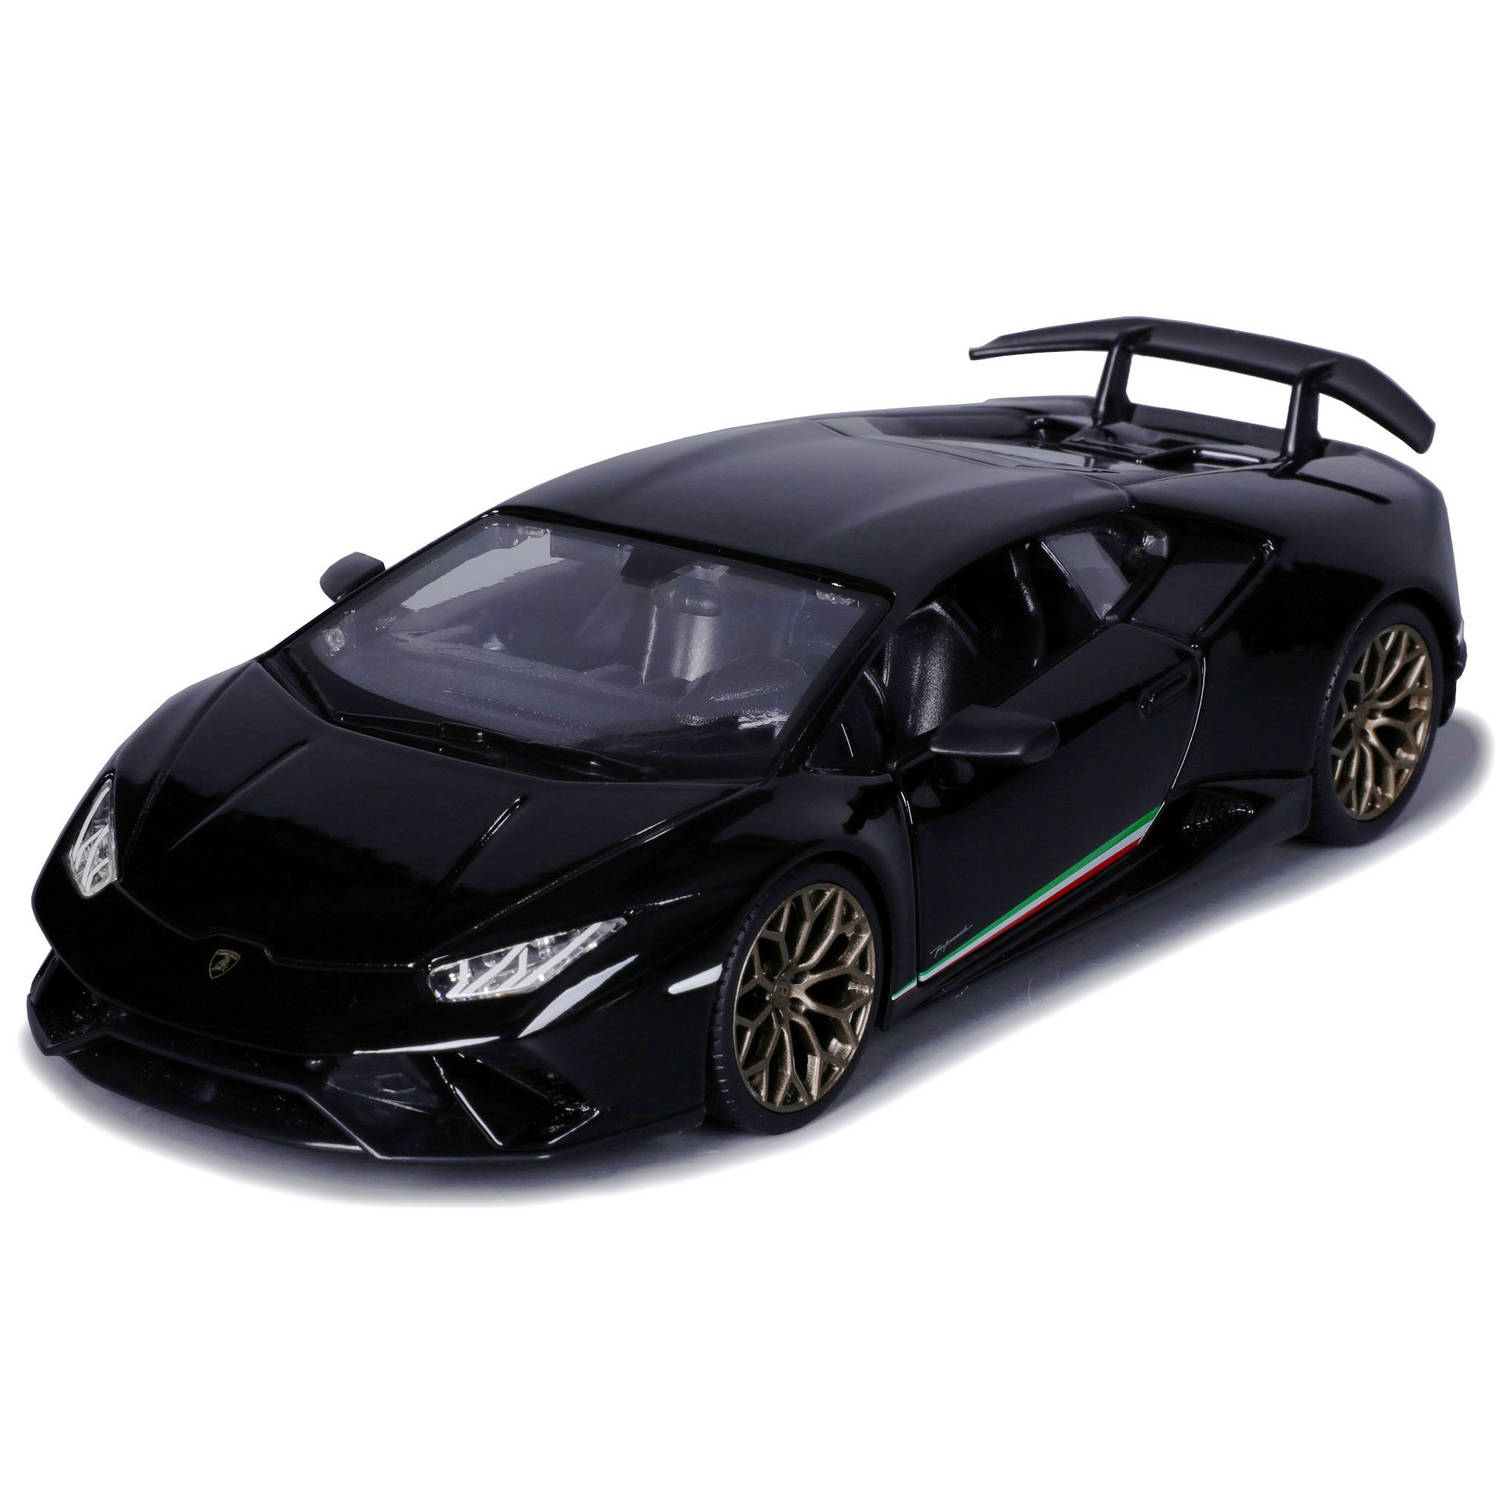 Bburago modelauto Lamborghini Huracan Performante zwart schaal 1:24 Speelgoed auto's